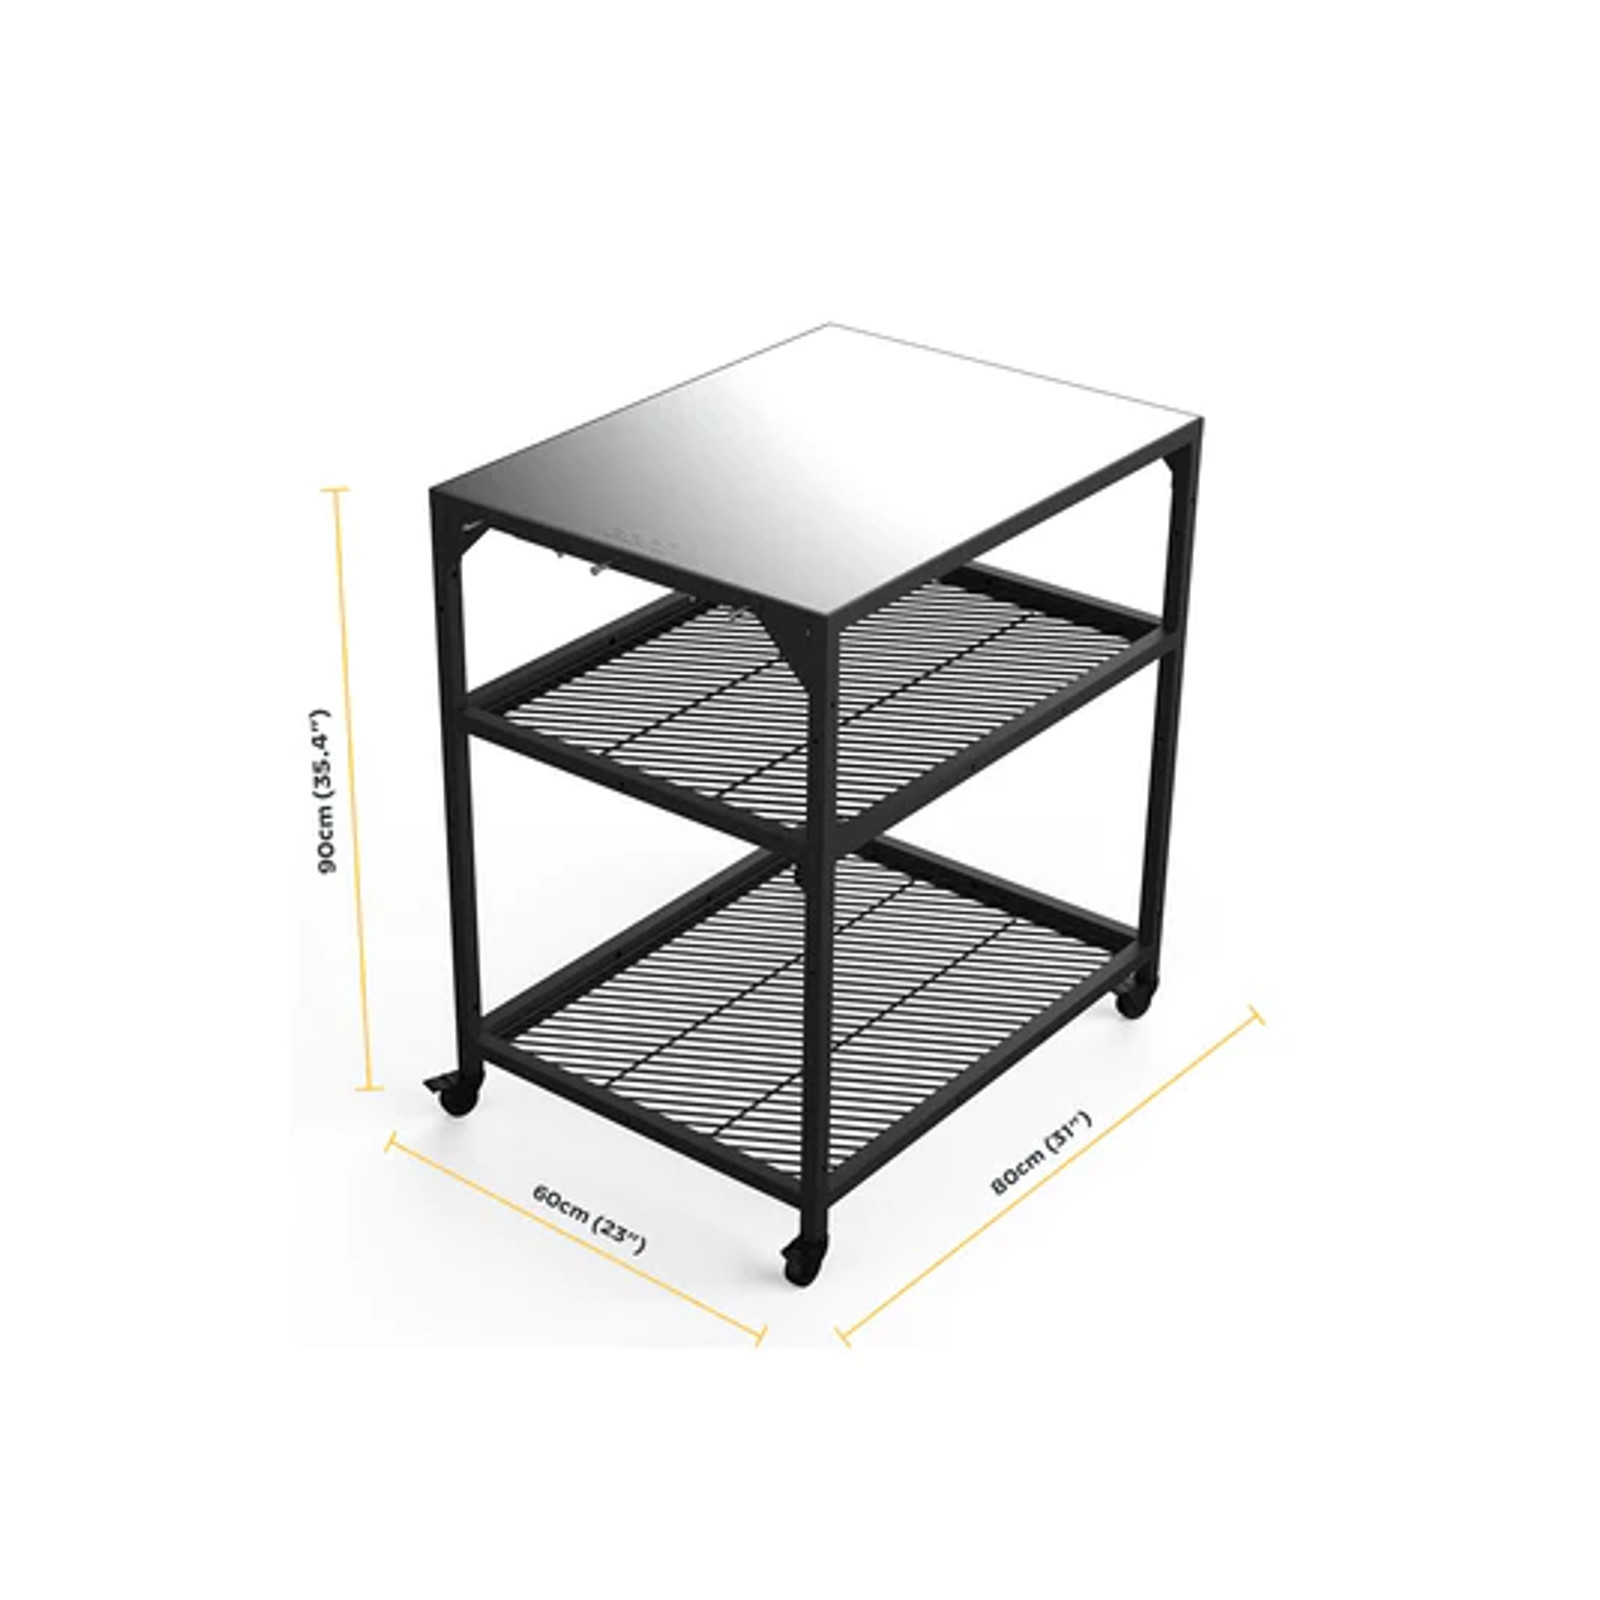 Modular Table - Medium